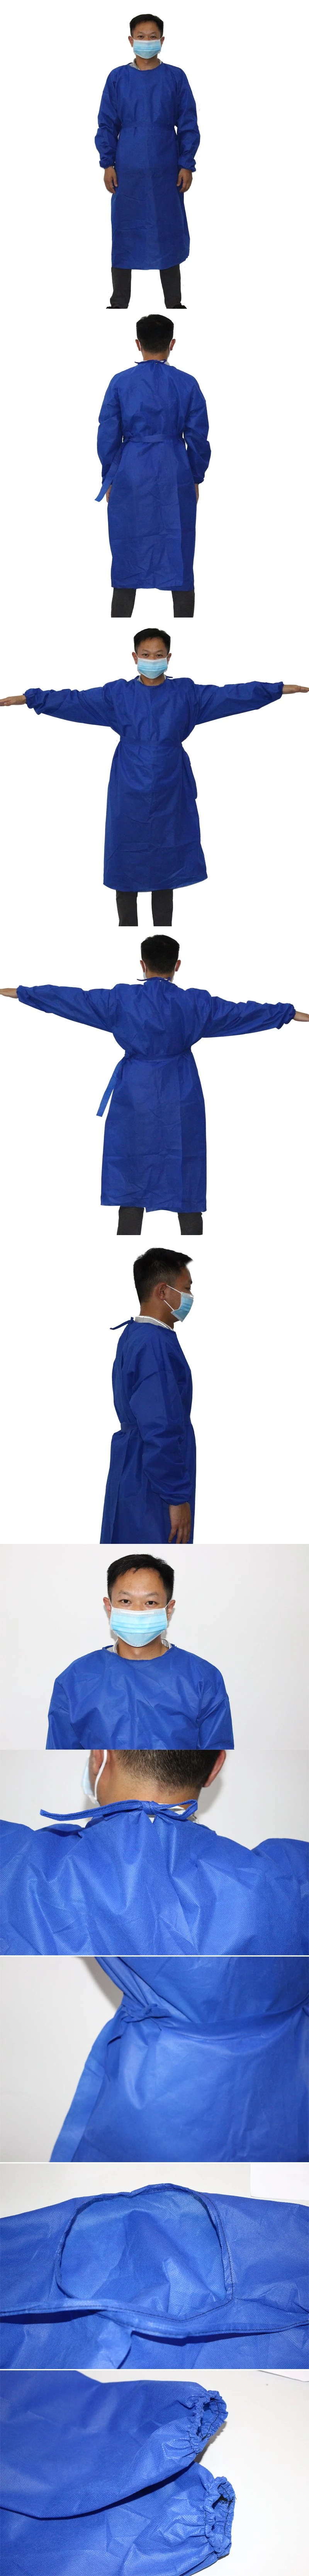 Disposable Medical Ce En14126 ISO PP+PE/SMS/SMMS/PP Non-Woven Gown